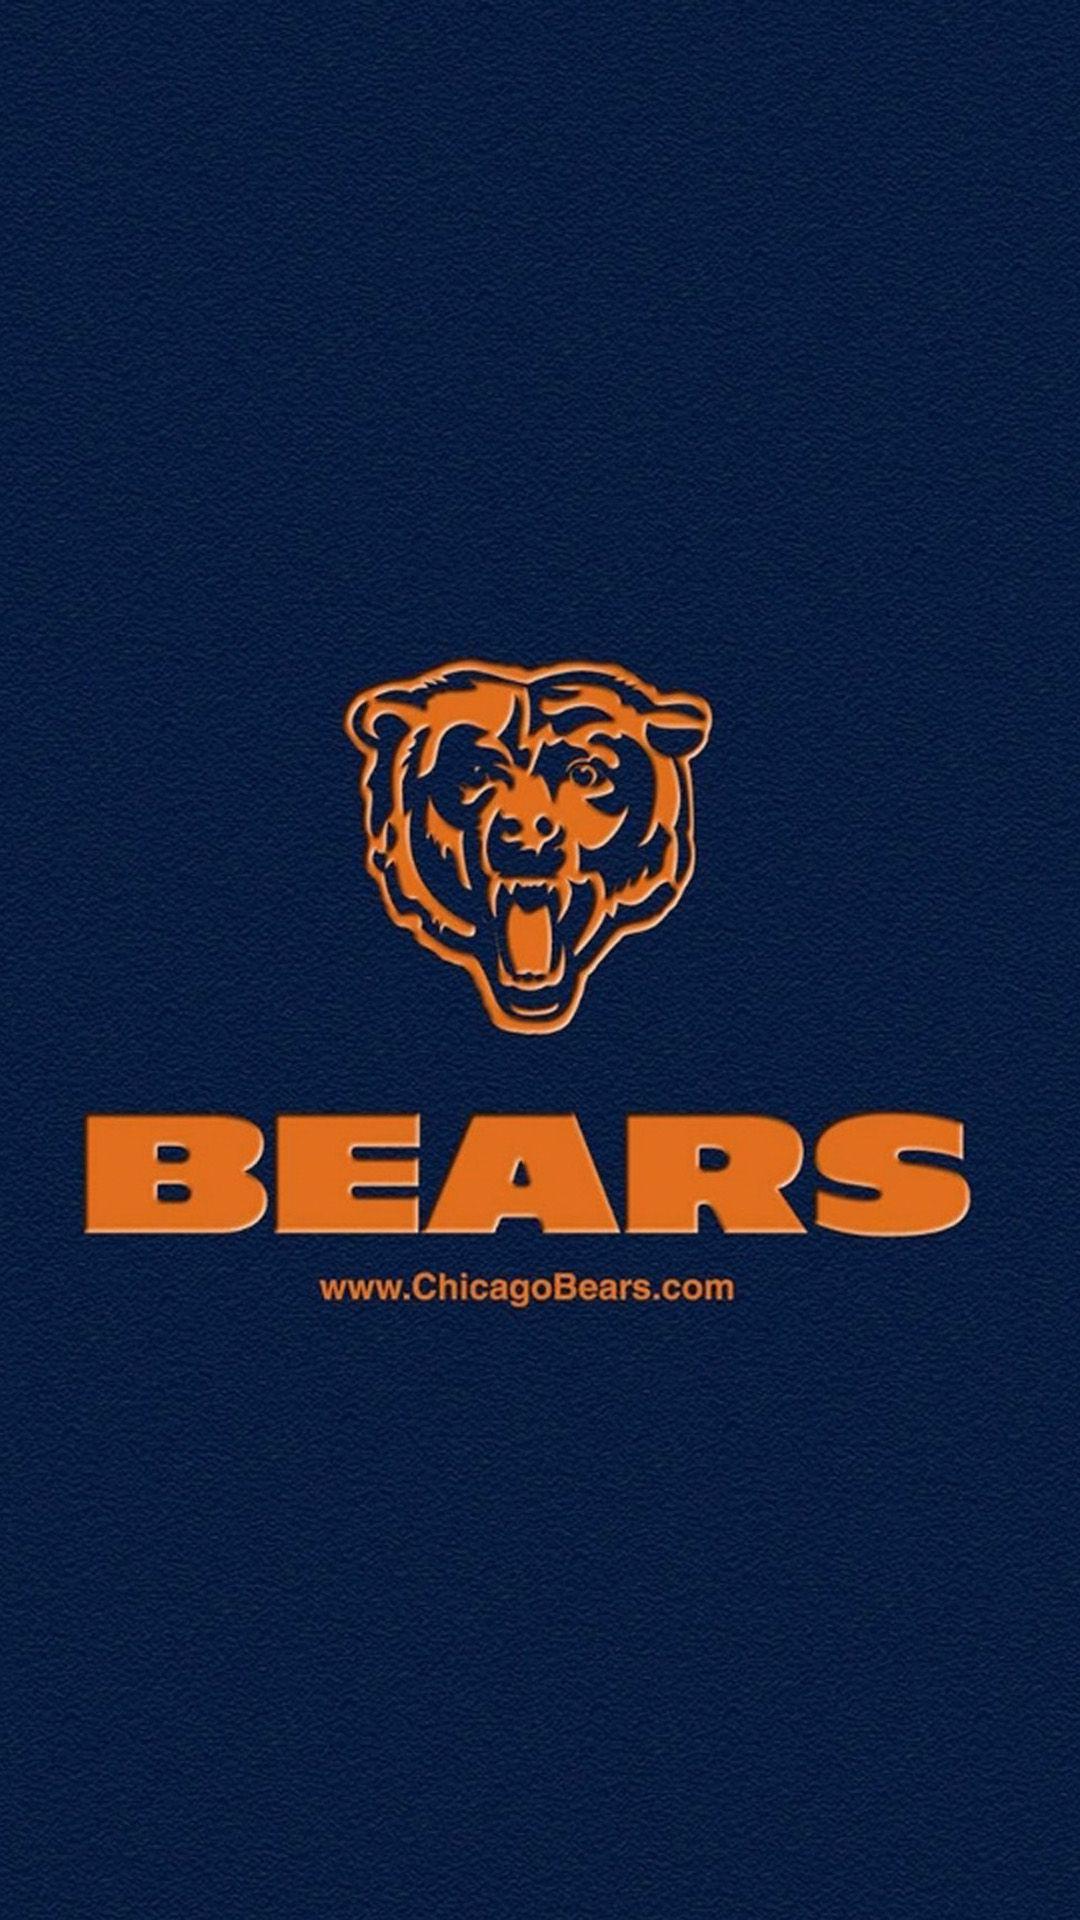 Chicago Bears Wallpaper Free, Full HD 1080p, Best HD Chicago Bears